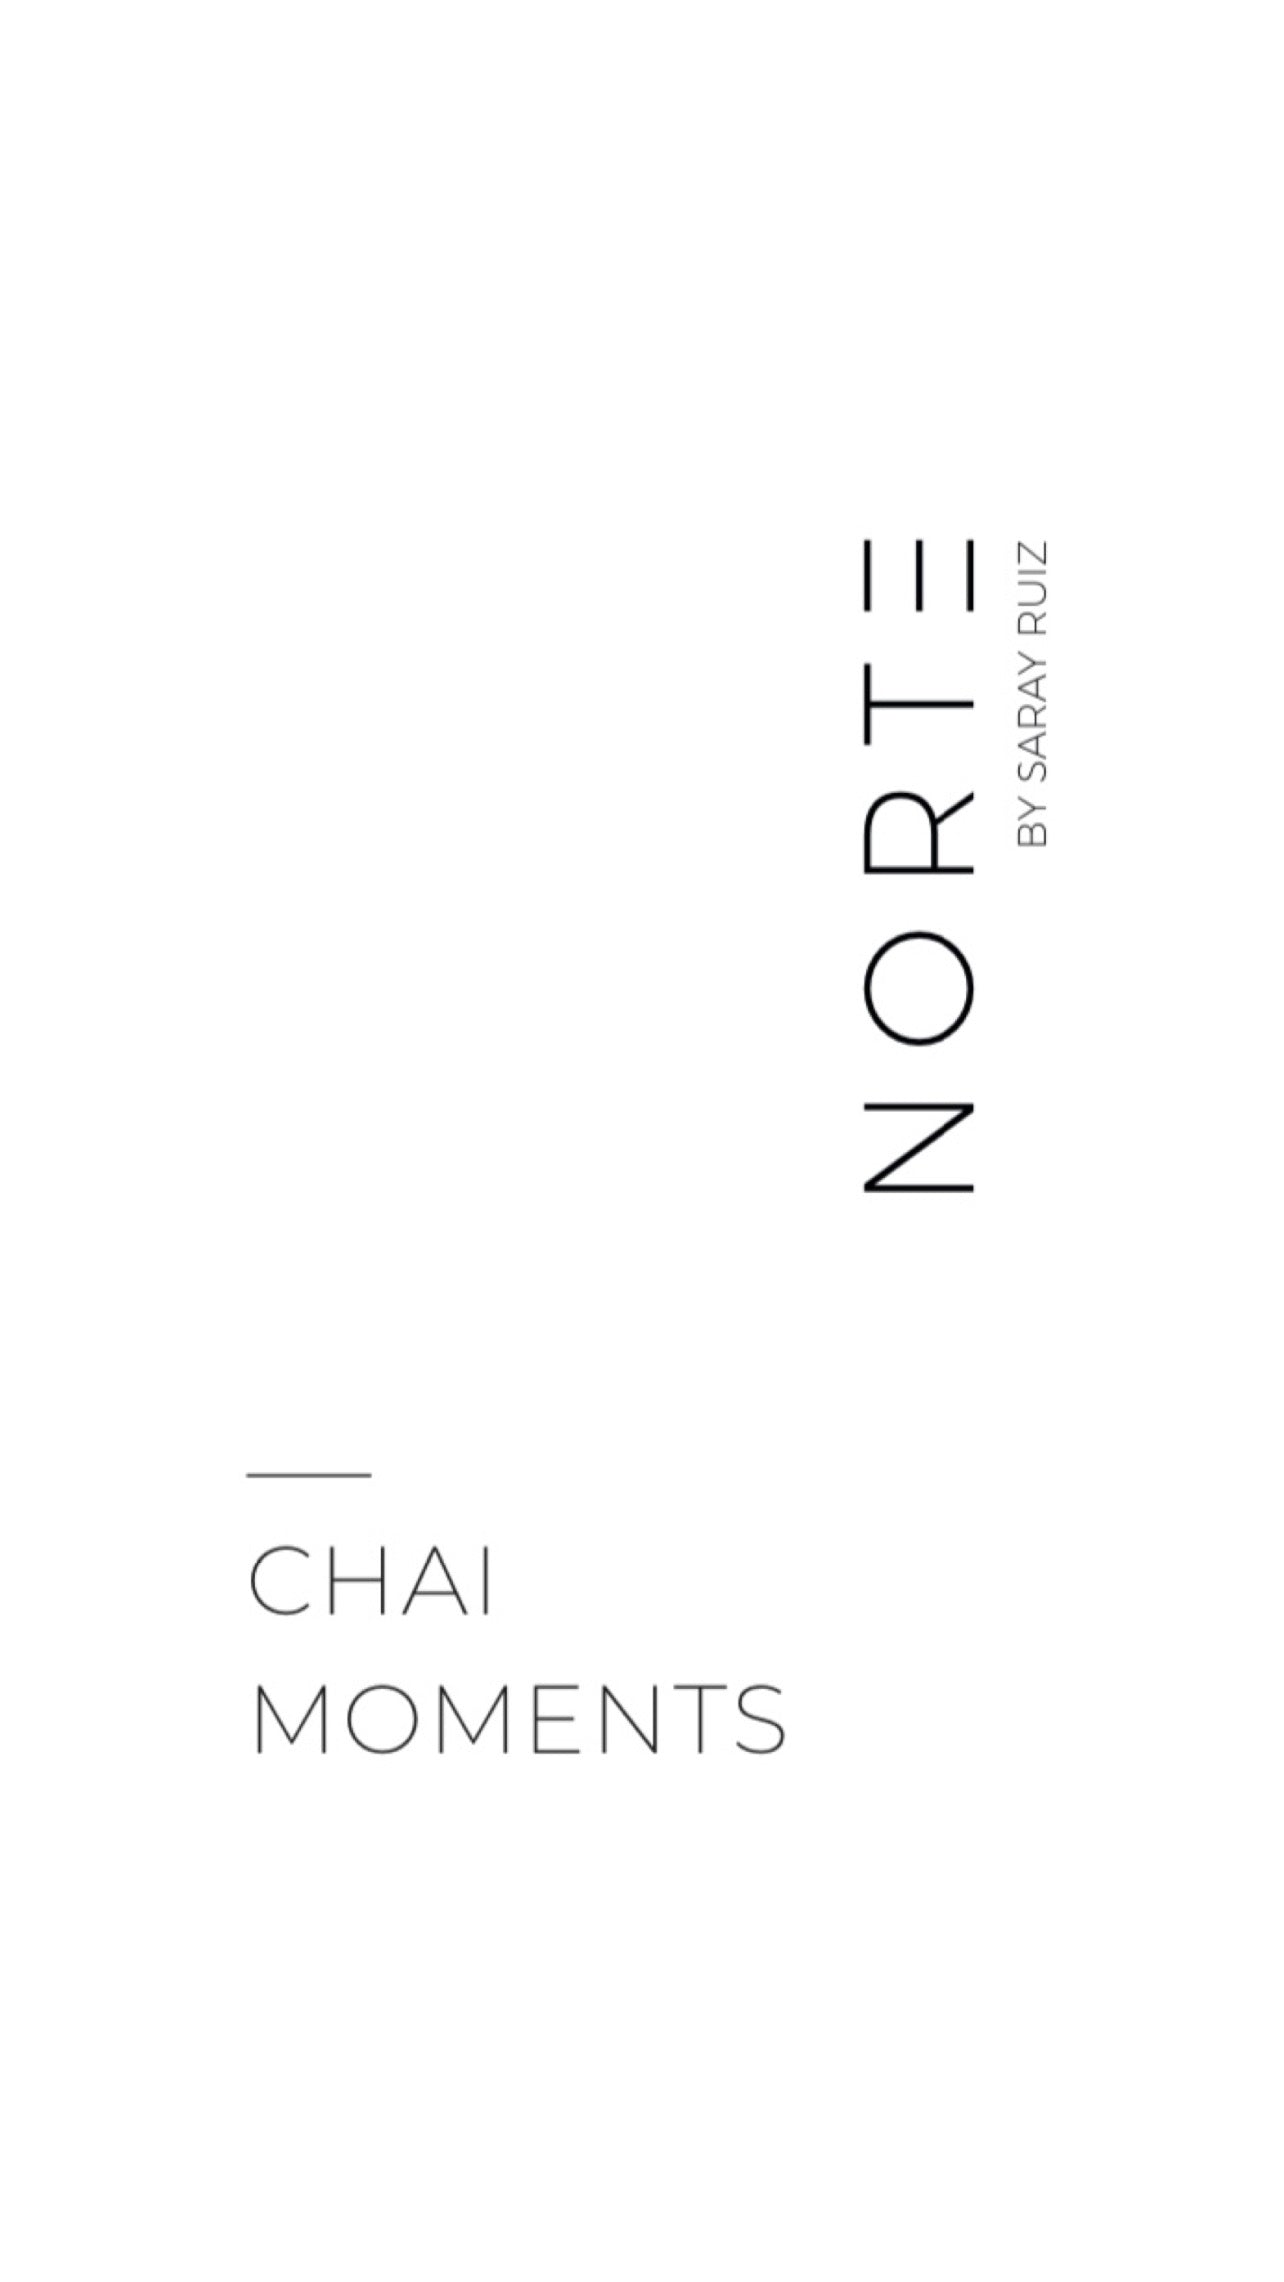 Chai moments